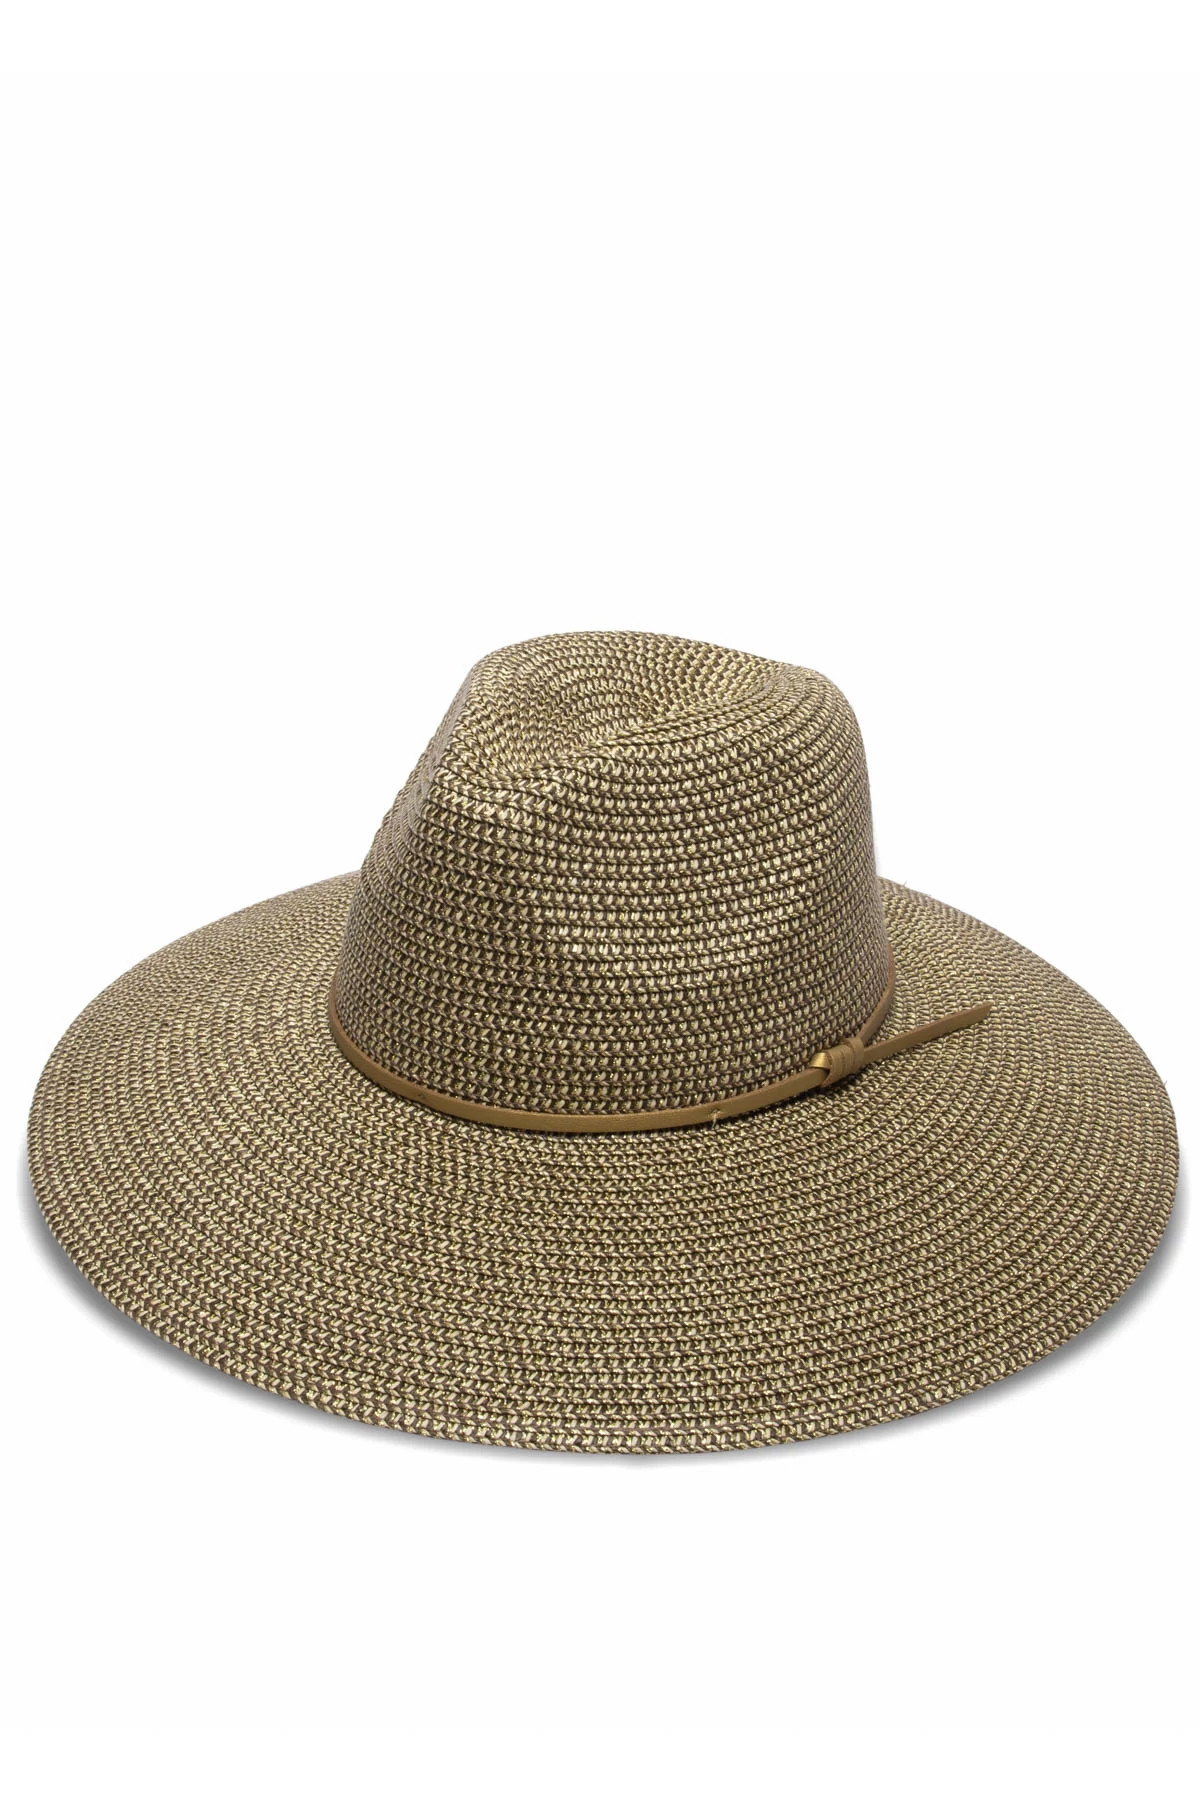 GOLD Harper Panama Hat image number 1